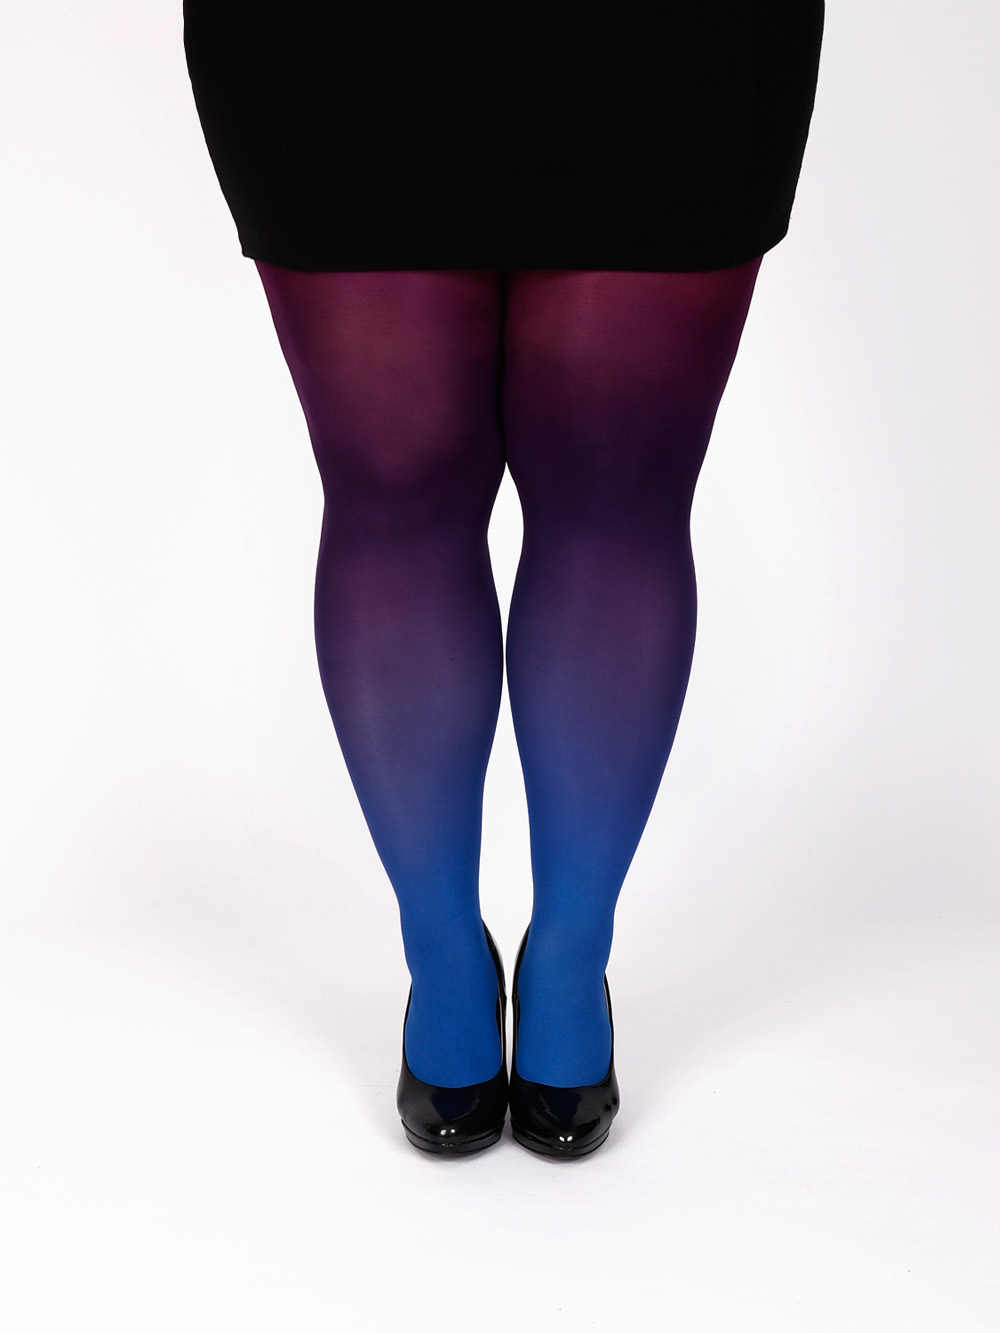 Plus size sapphire-burgundy tights - Virivee Tights - Unique tights ...